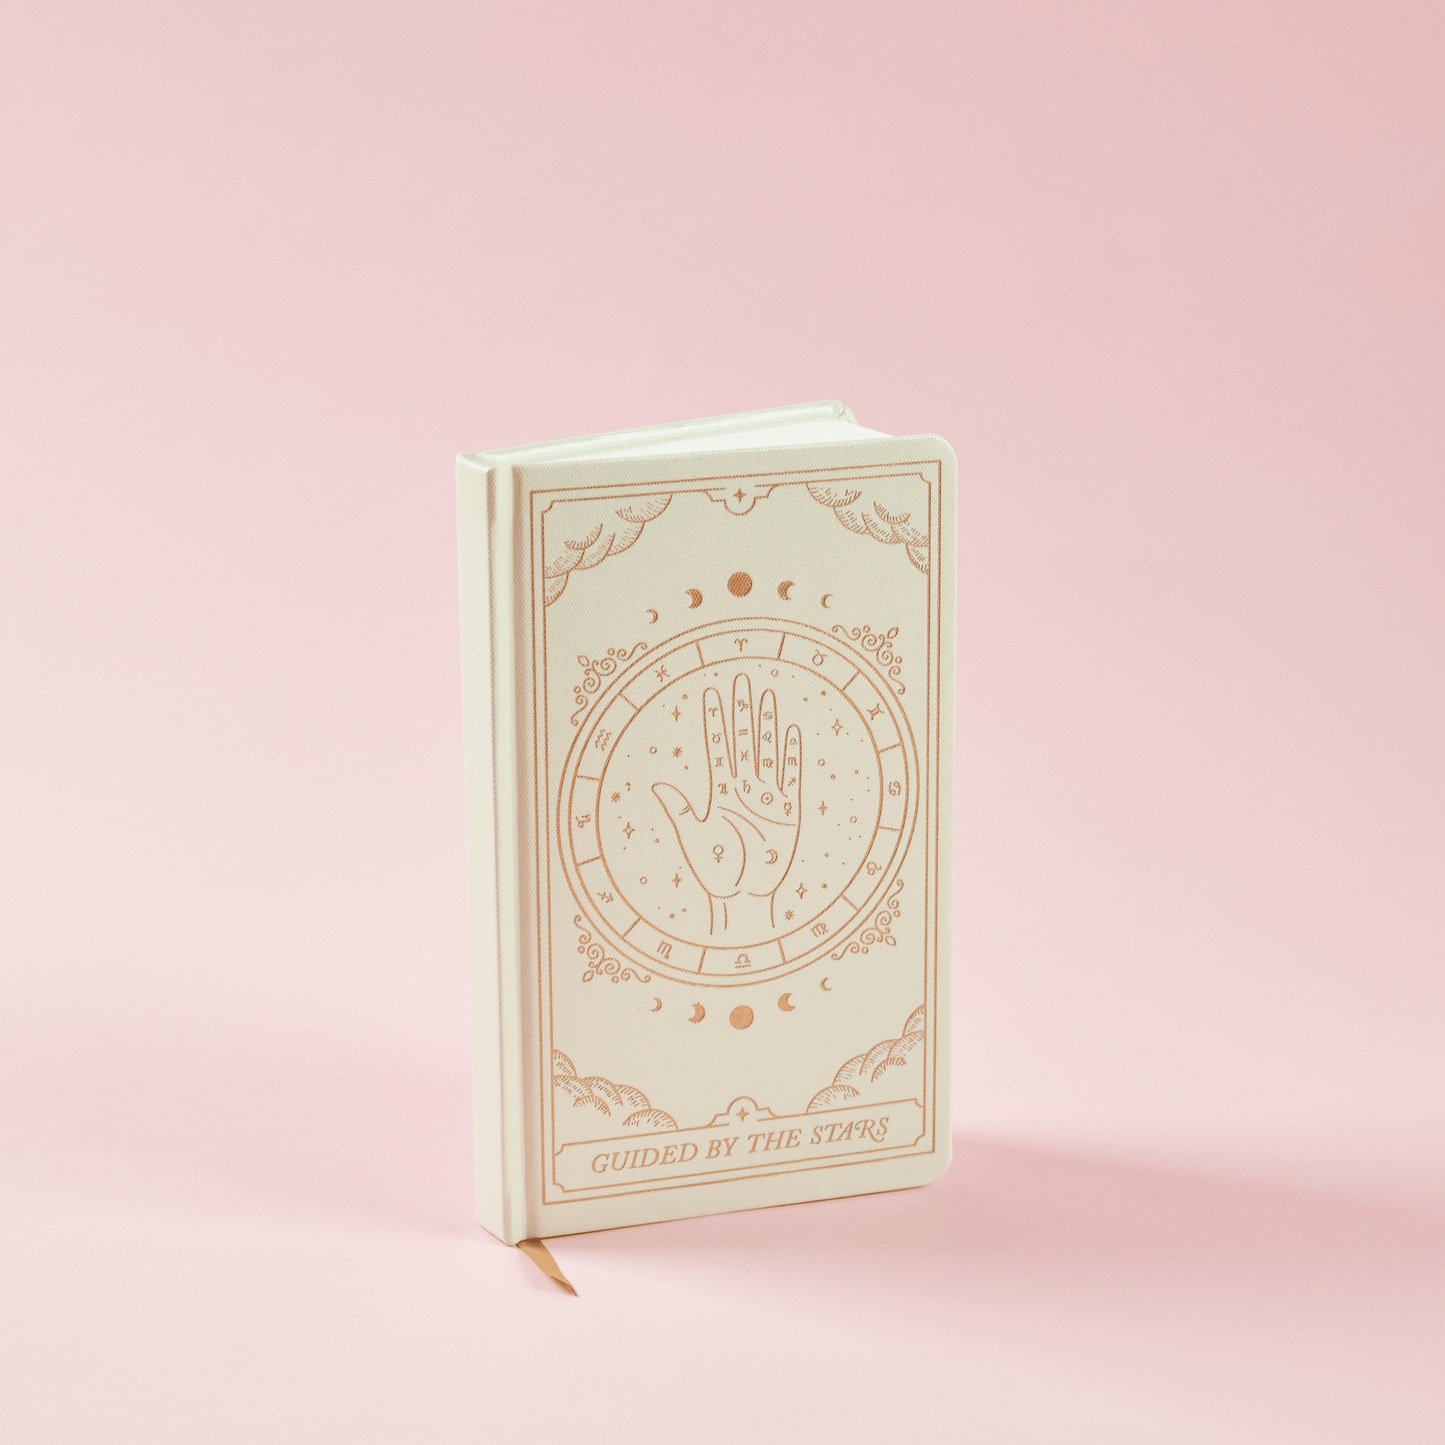 Bookcloth Journal, 5.125" X 8.25" - Zodiac on a pink background.